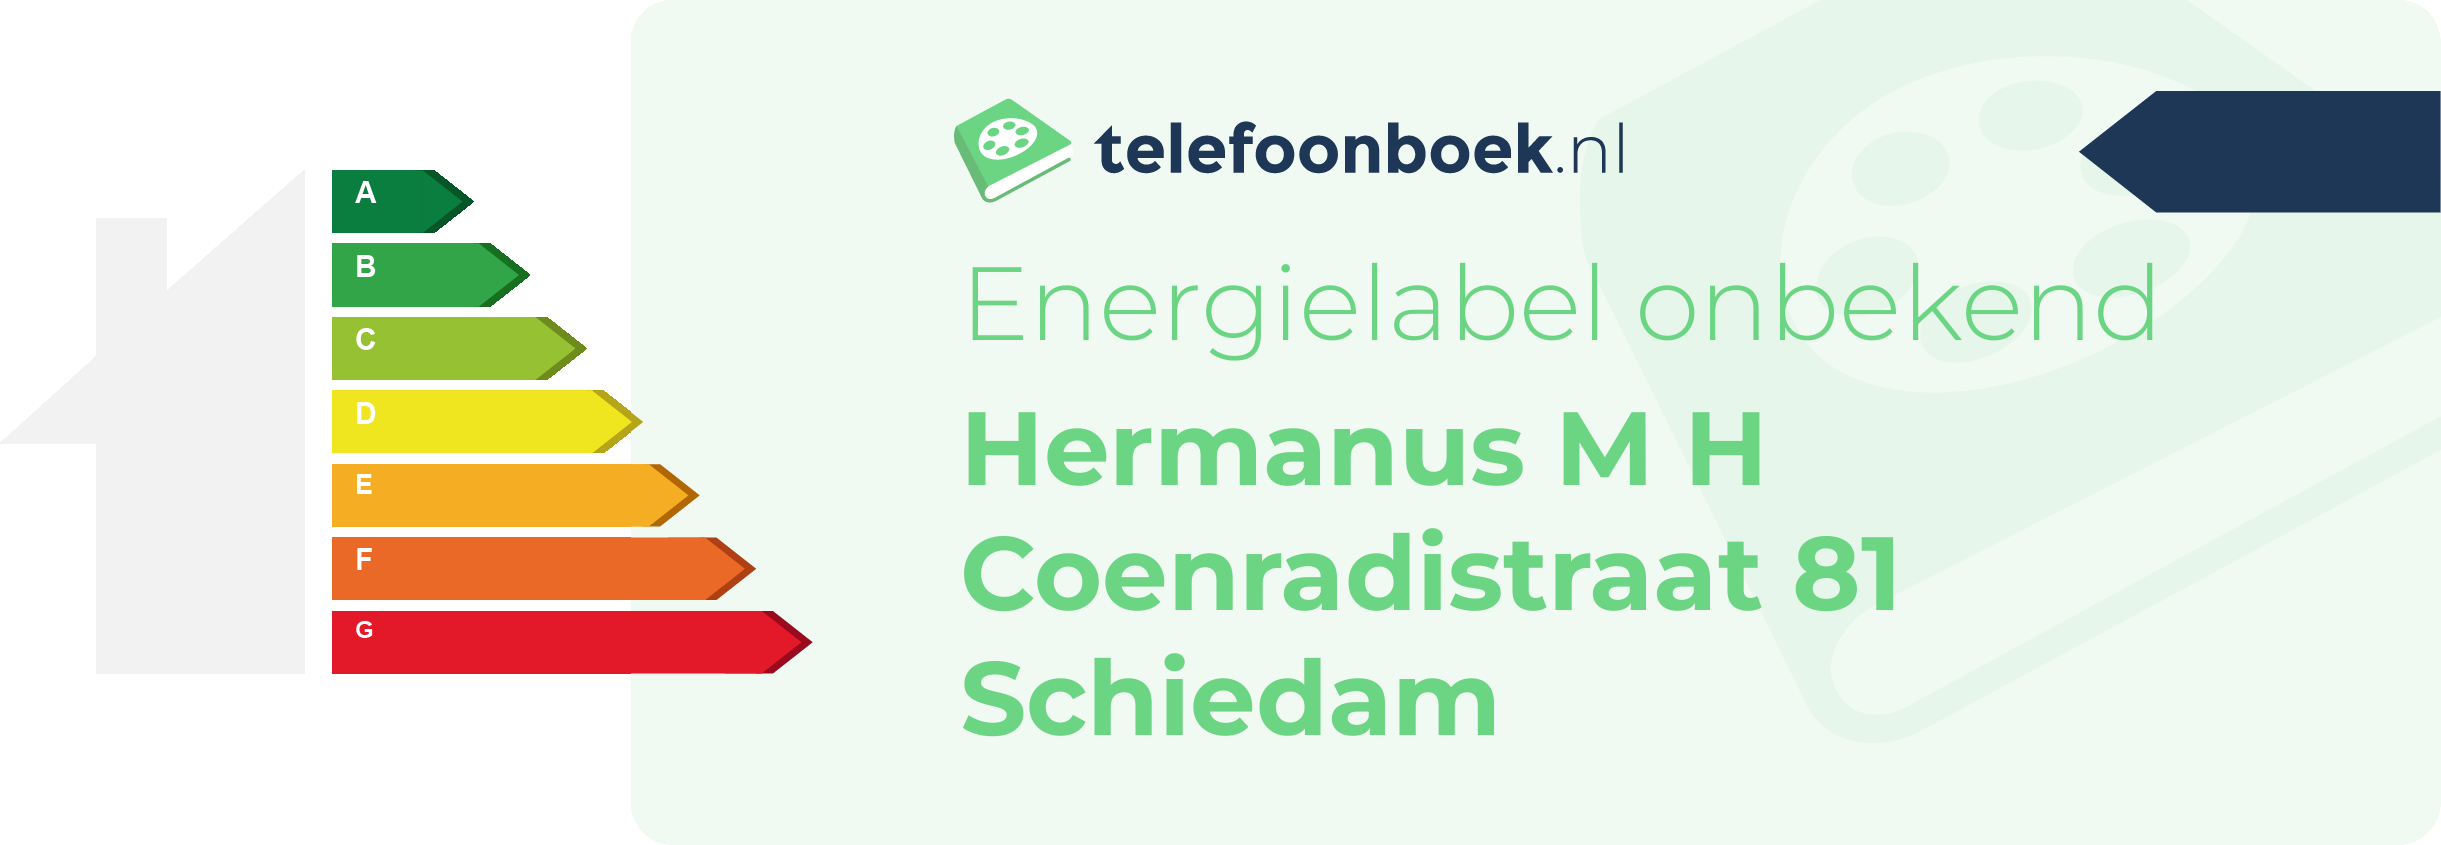 Energielabel Hermanus M H Coenradistraat 81 Schiedam